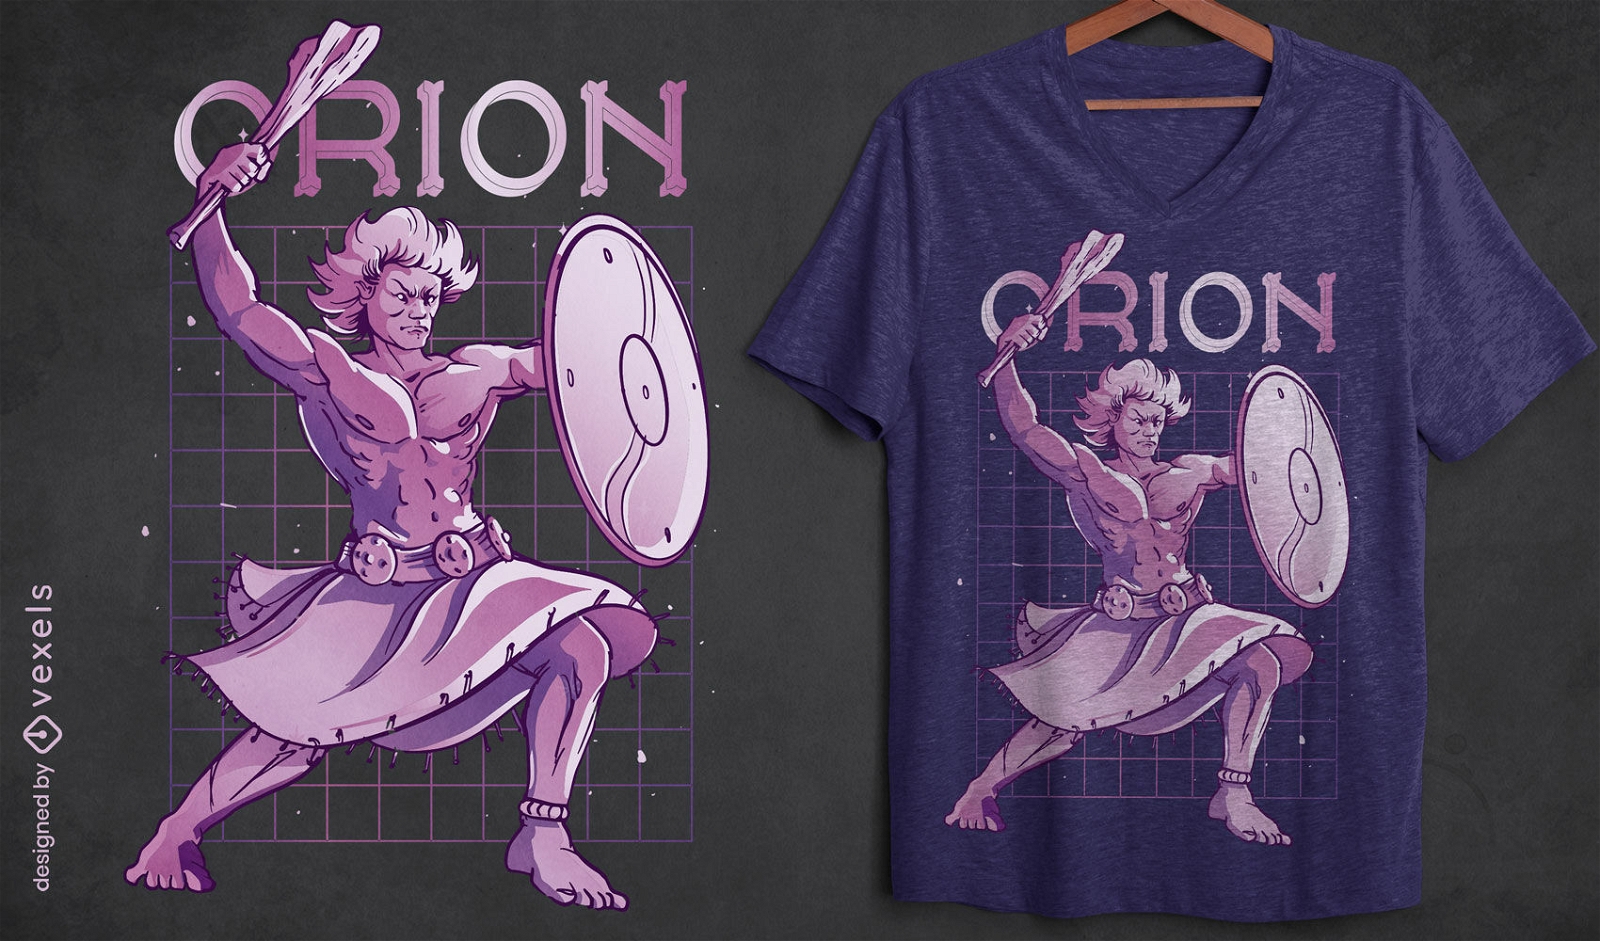 Orion griechische Mythologie T-Shirt Design